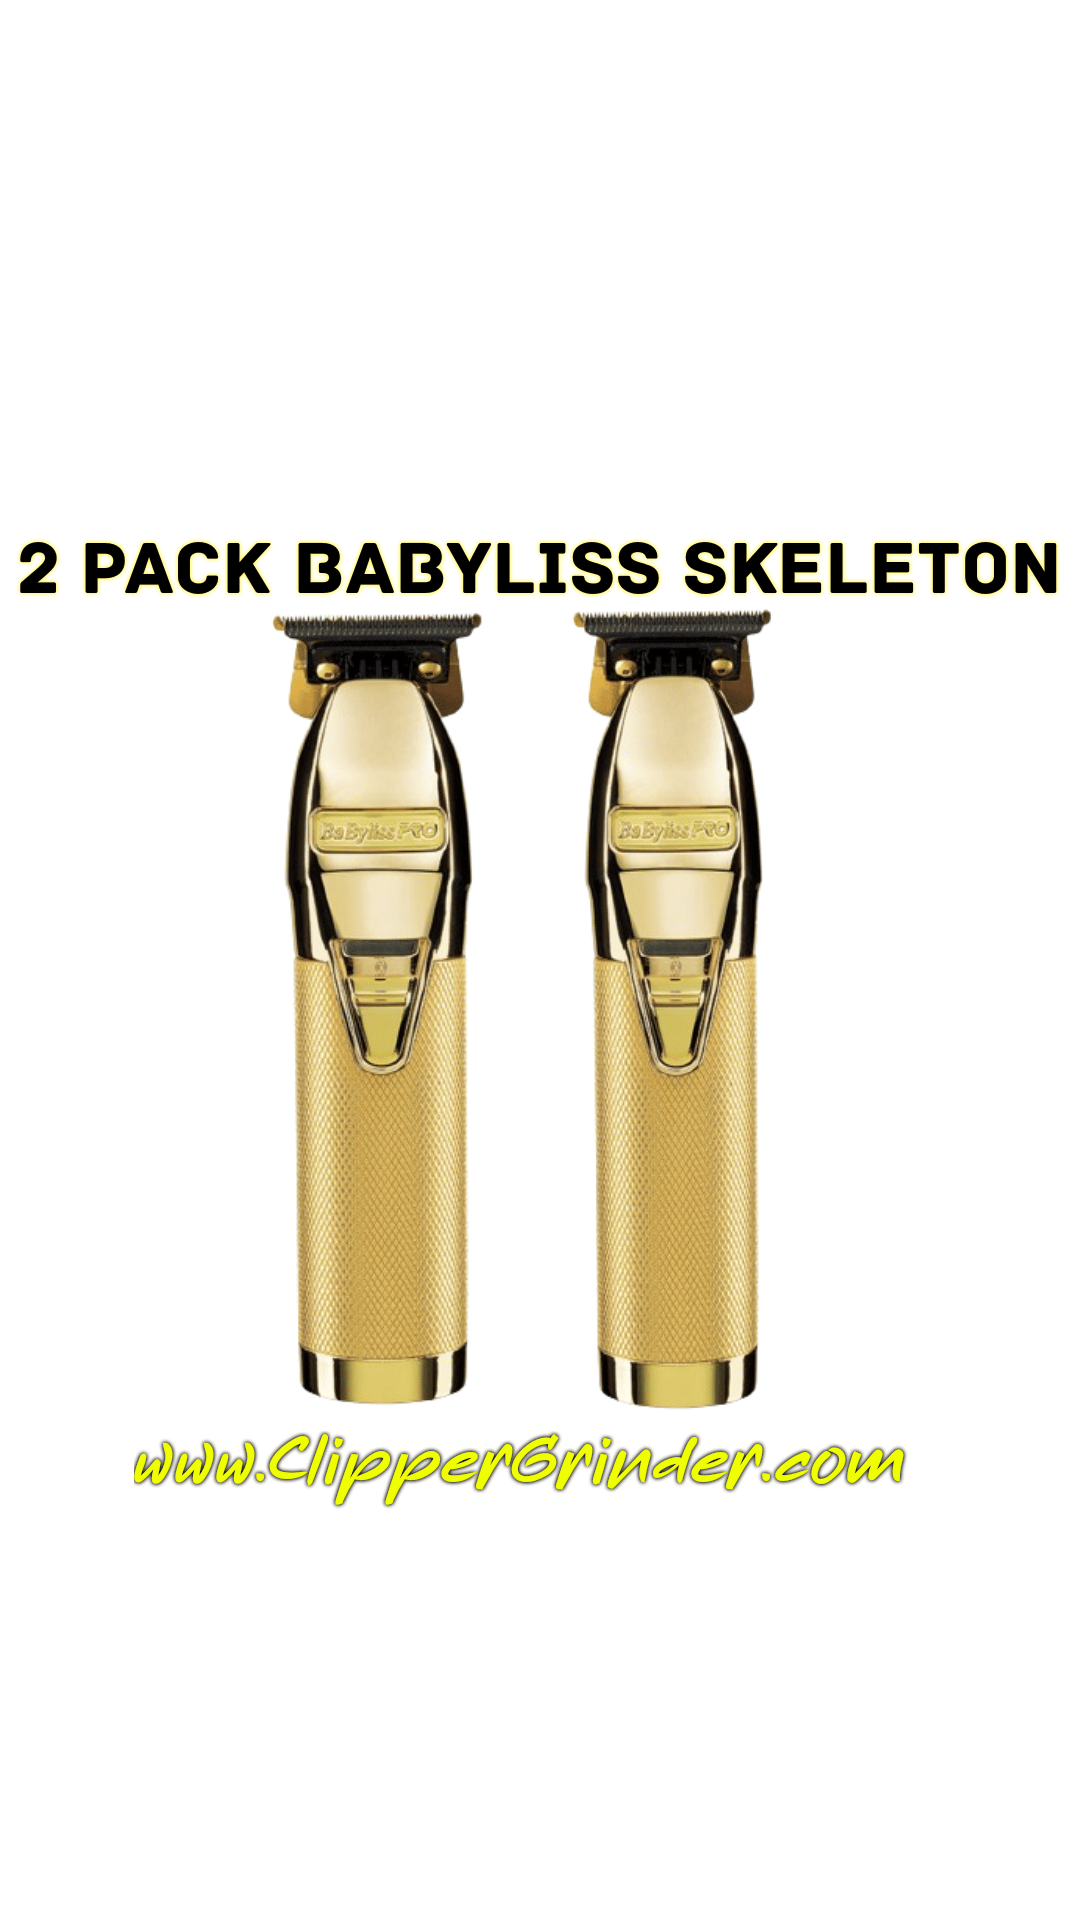 (3 Week Delivery) 2 Pack Gold Babyliss Skeleton Trimmer Combo